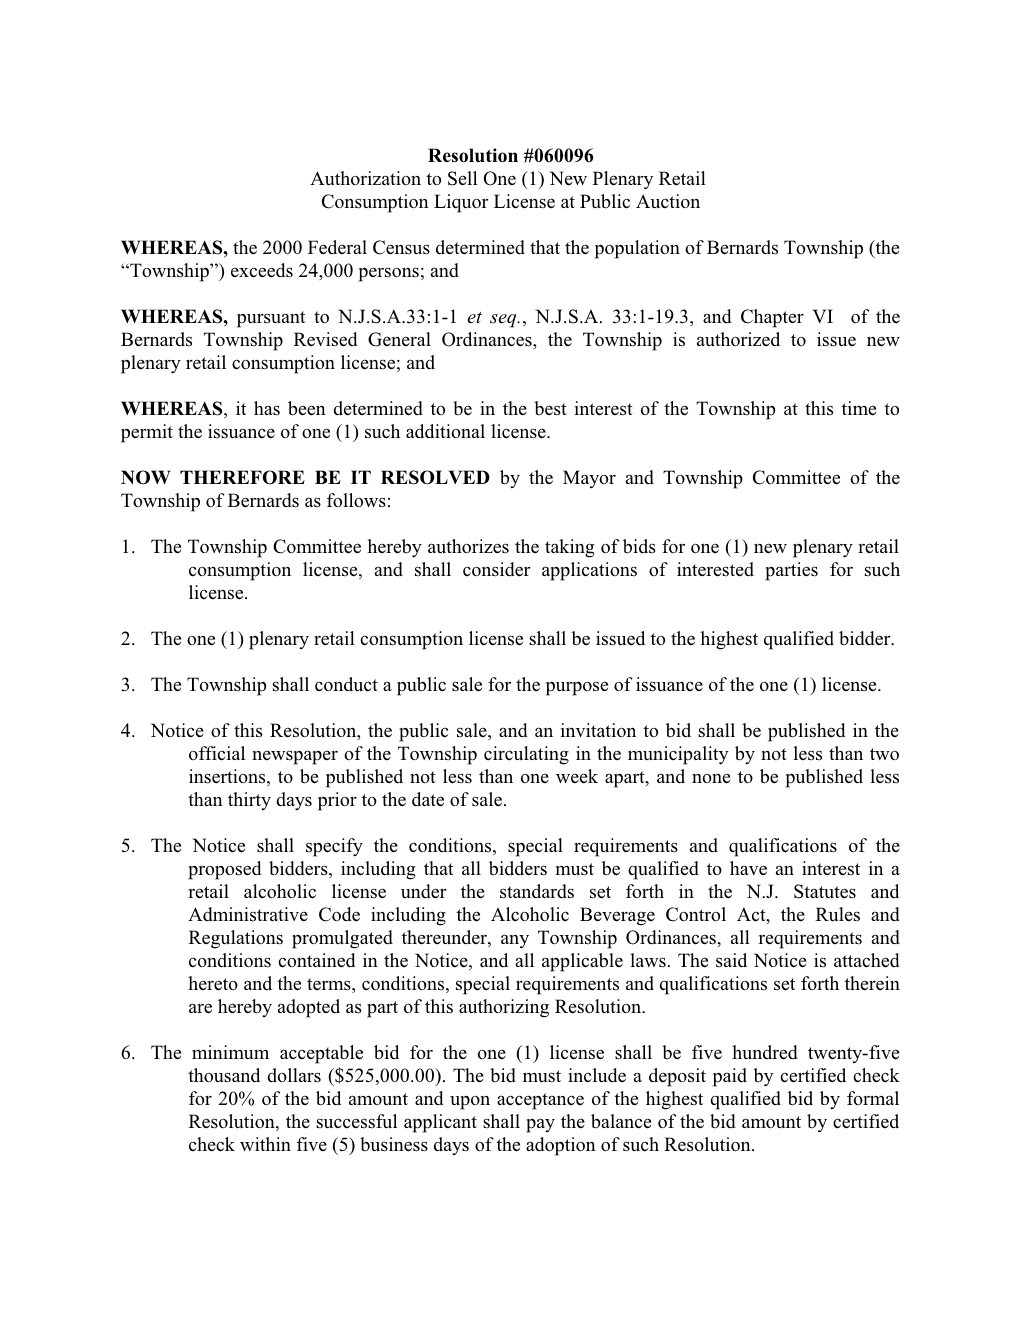 Resolution - 1 Consumption Liquor License Bernards (A0394101;1)